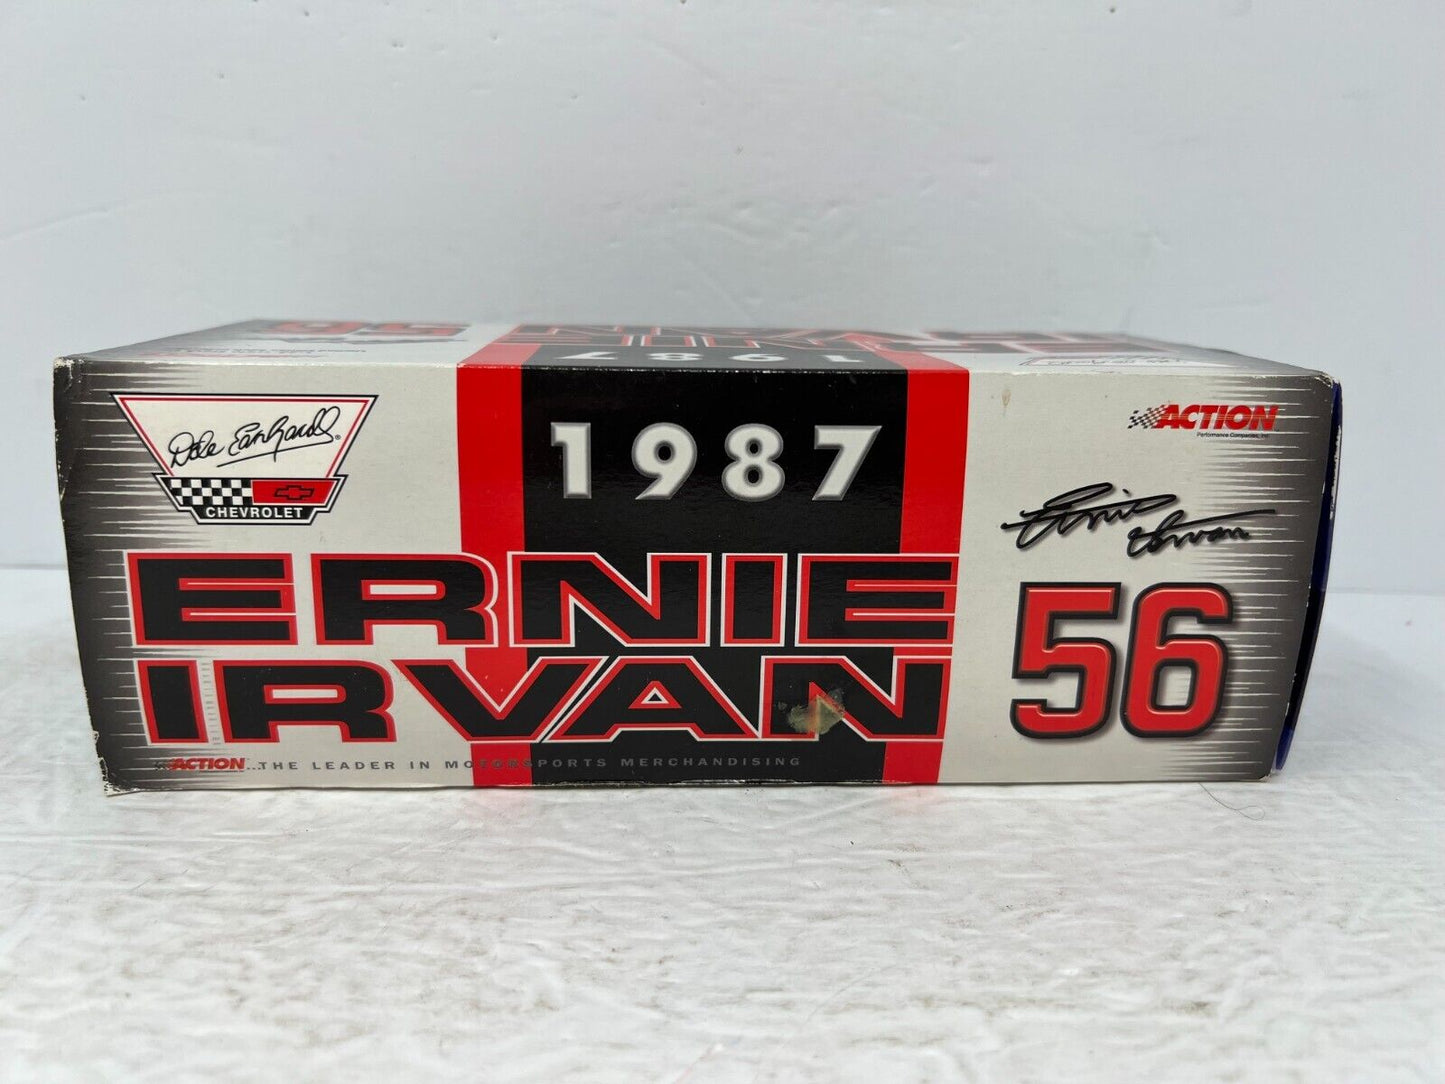 Action Nascar #56 Ernie Irvan Dale Earnhardt Chevy 1987 Monte Carlo 1:24 Diecast